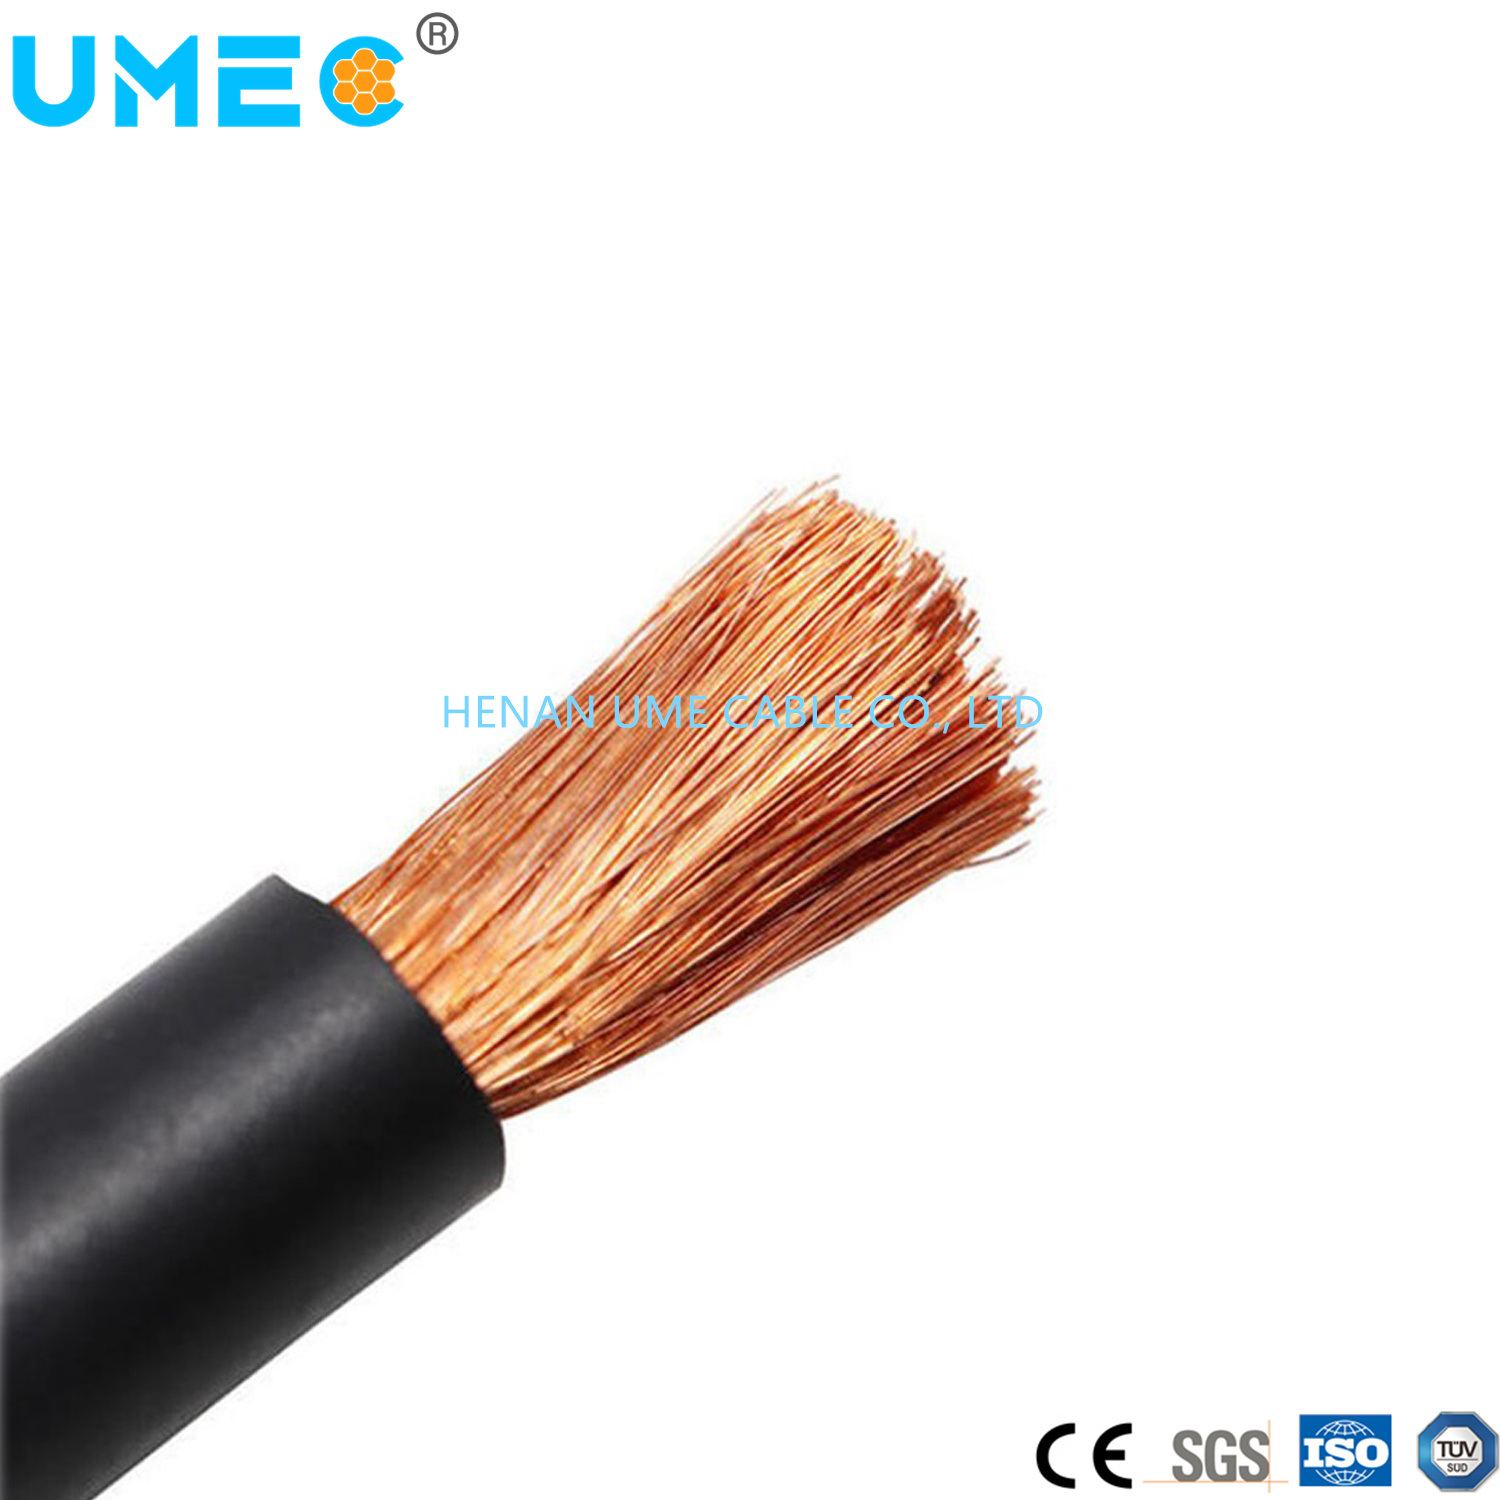 
                Venda por grosso de silicone preta do cabo laranja ou Alto transparente de borracha de silicone cobre Cabo condutor 16mm2
            